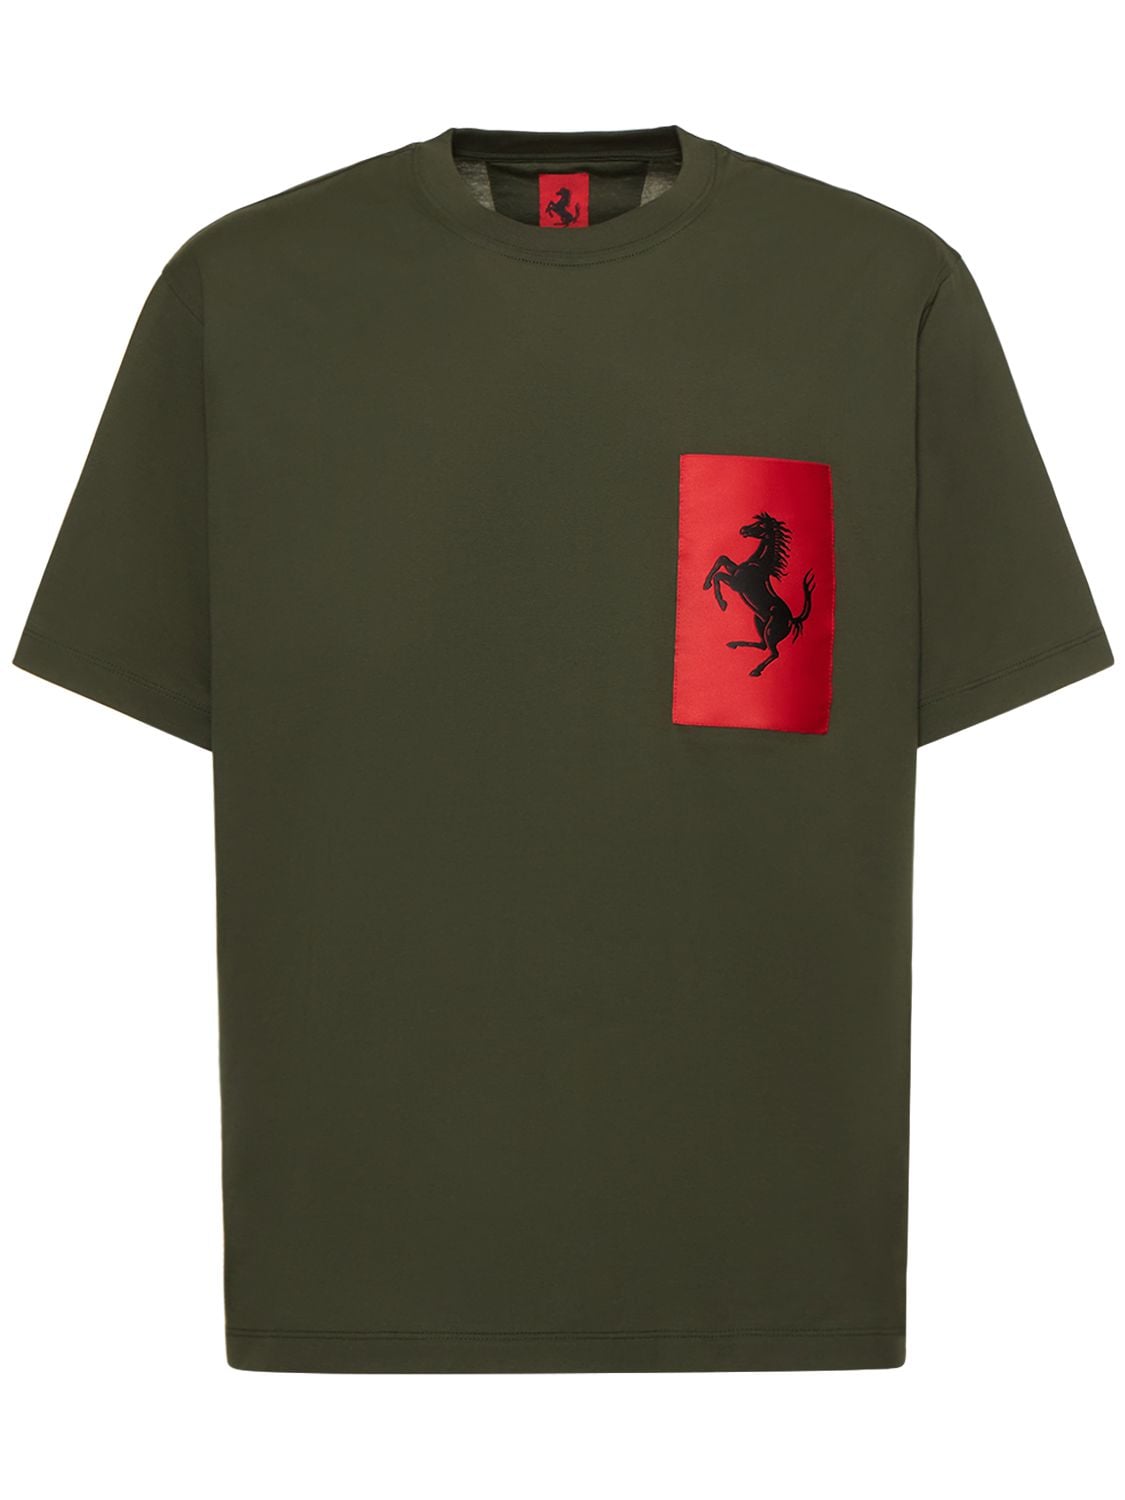 FERRARI S/s T-shirt W/ Label Pocket